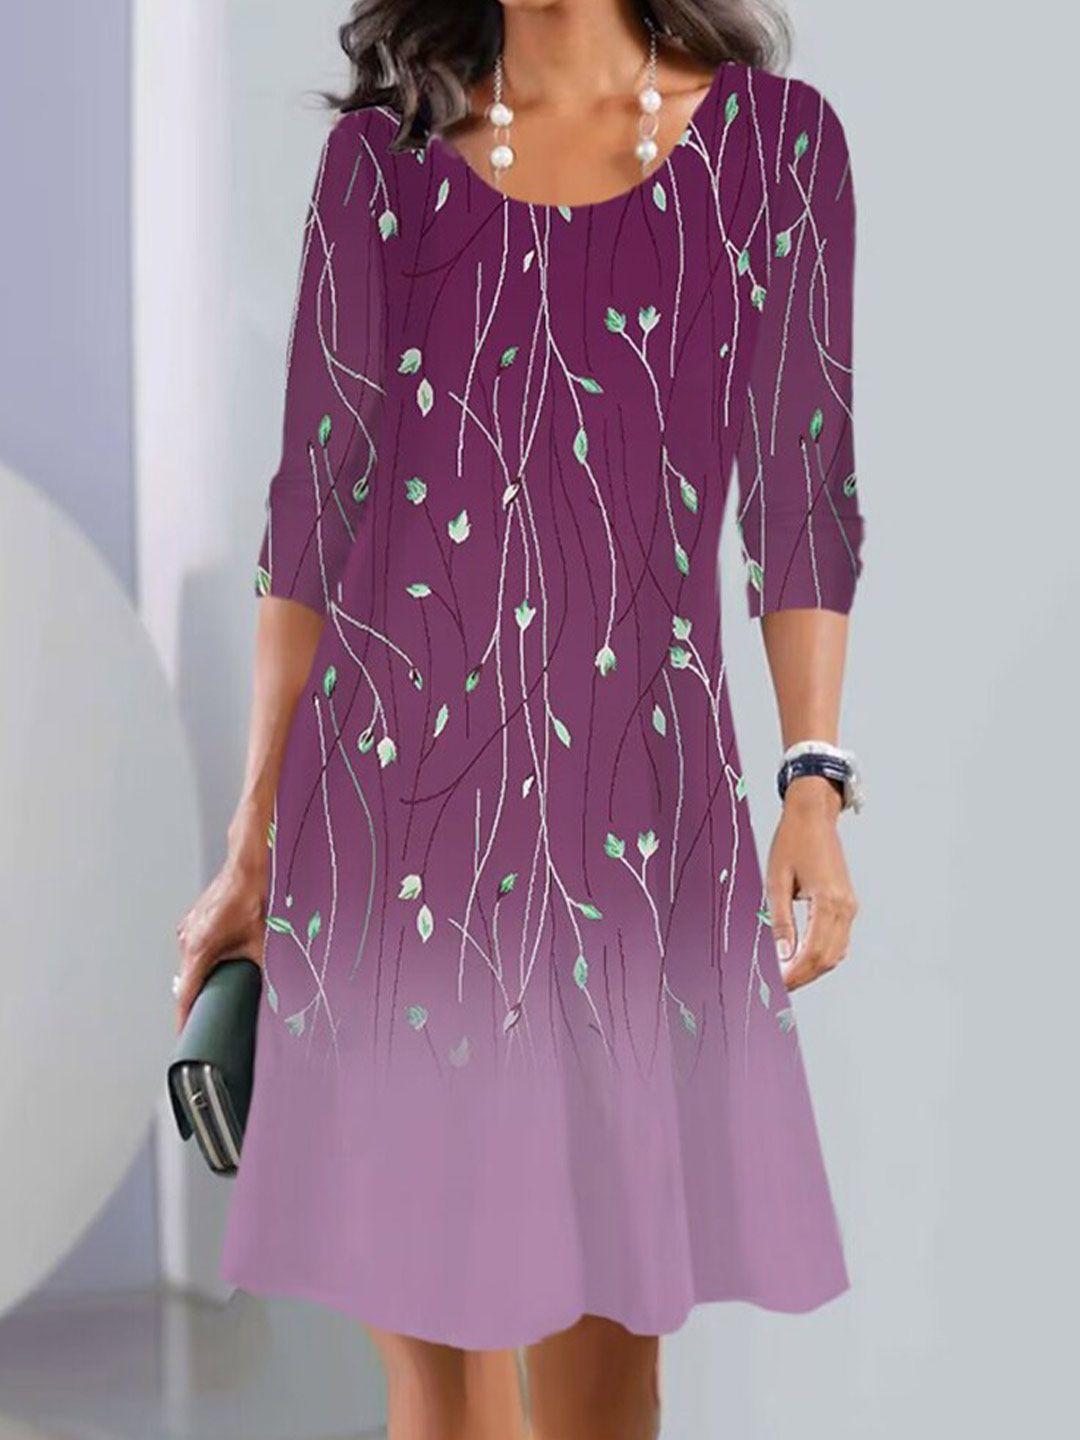 stylecast x kpop burgundy ethnic motifs print a-line dress